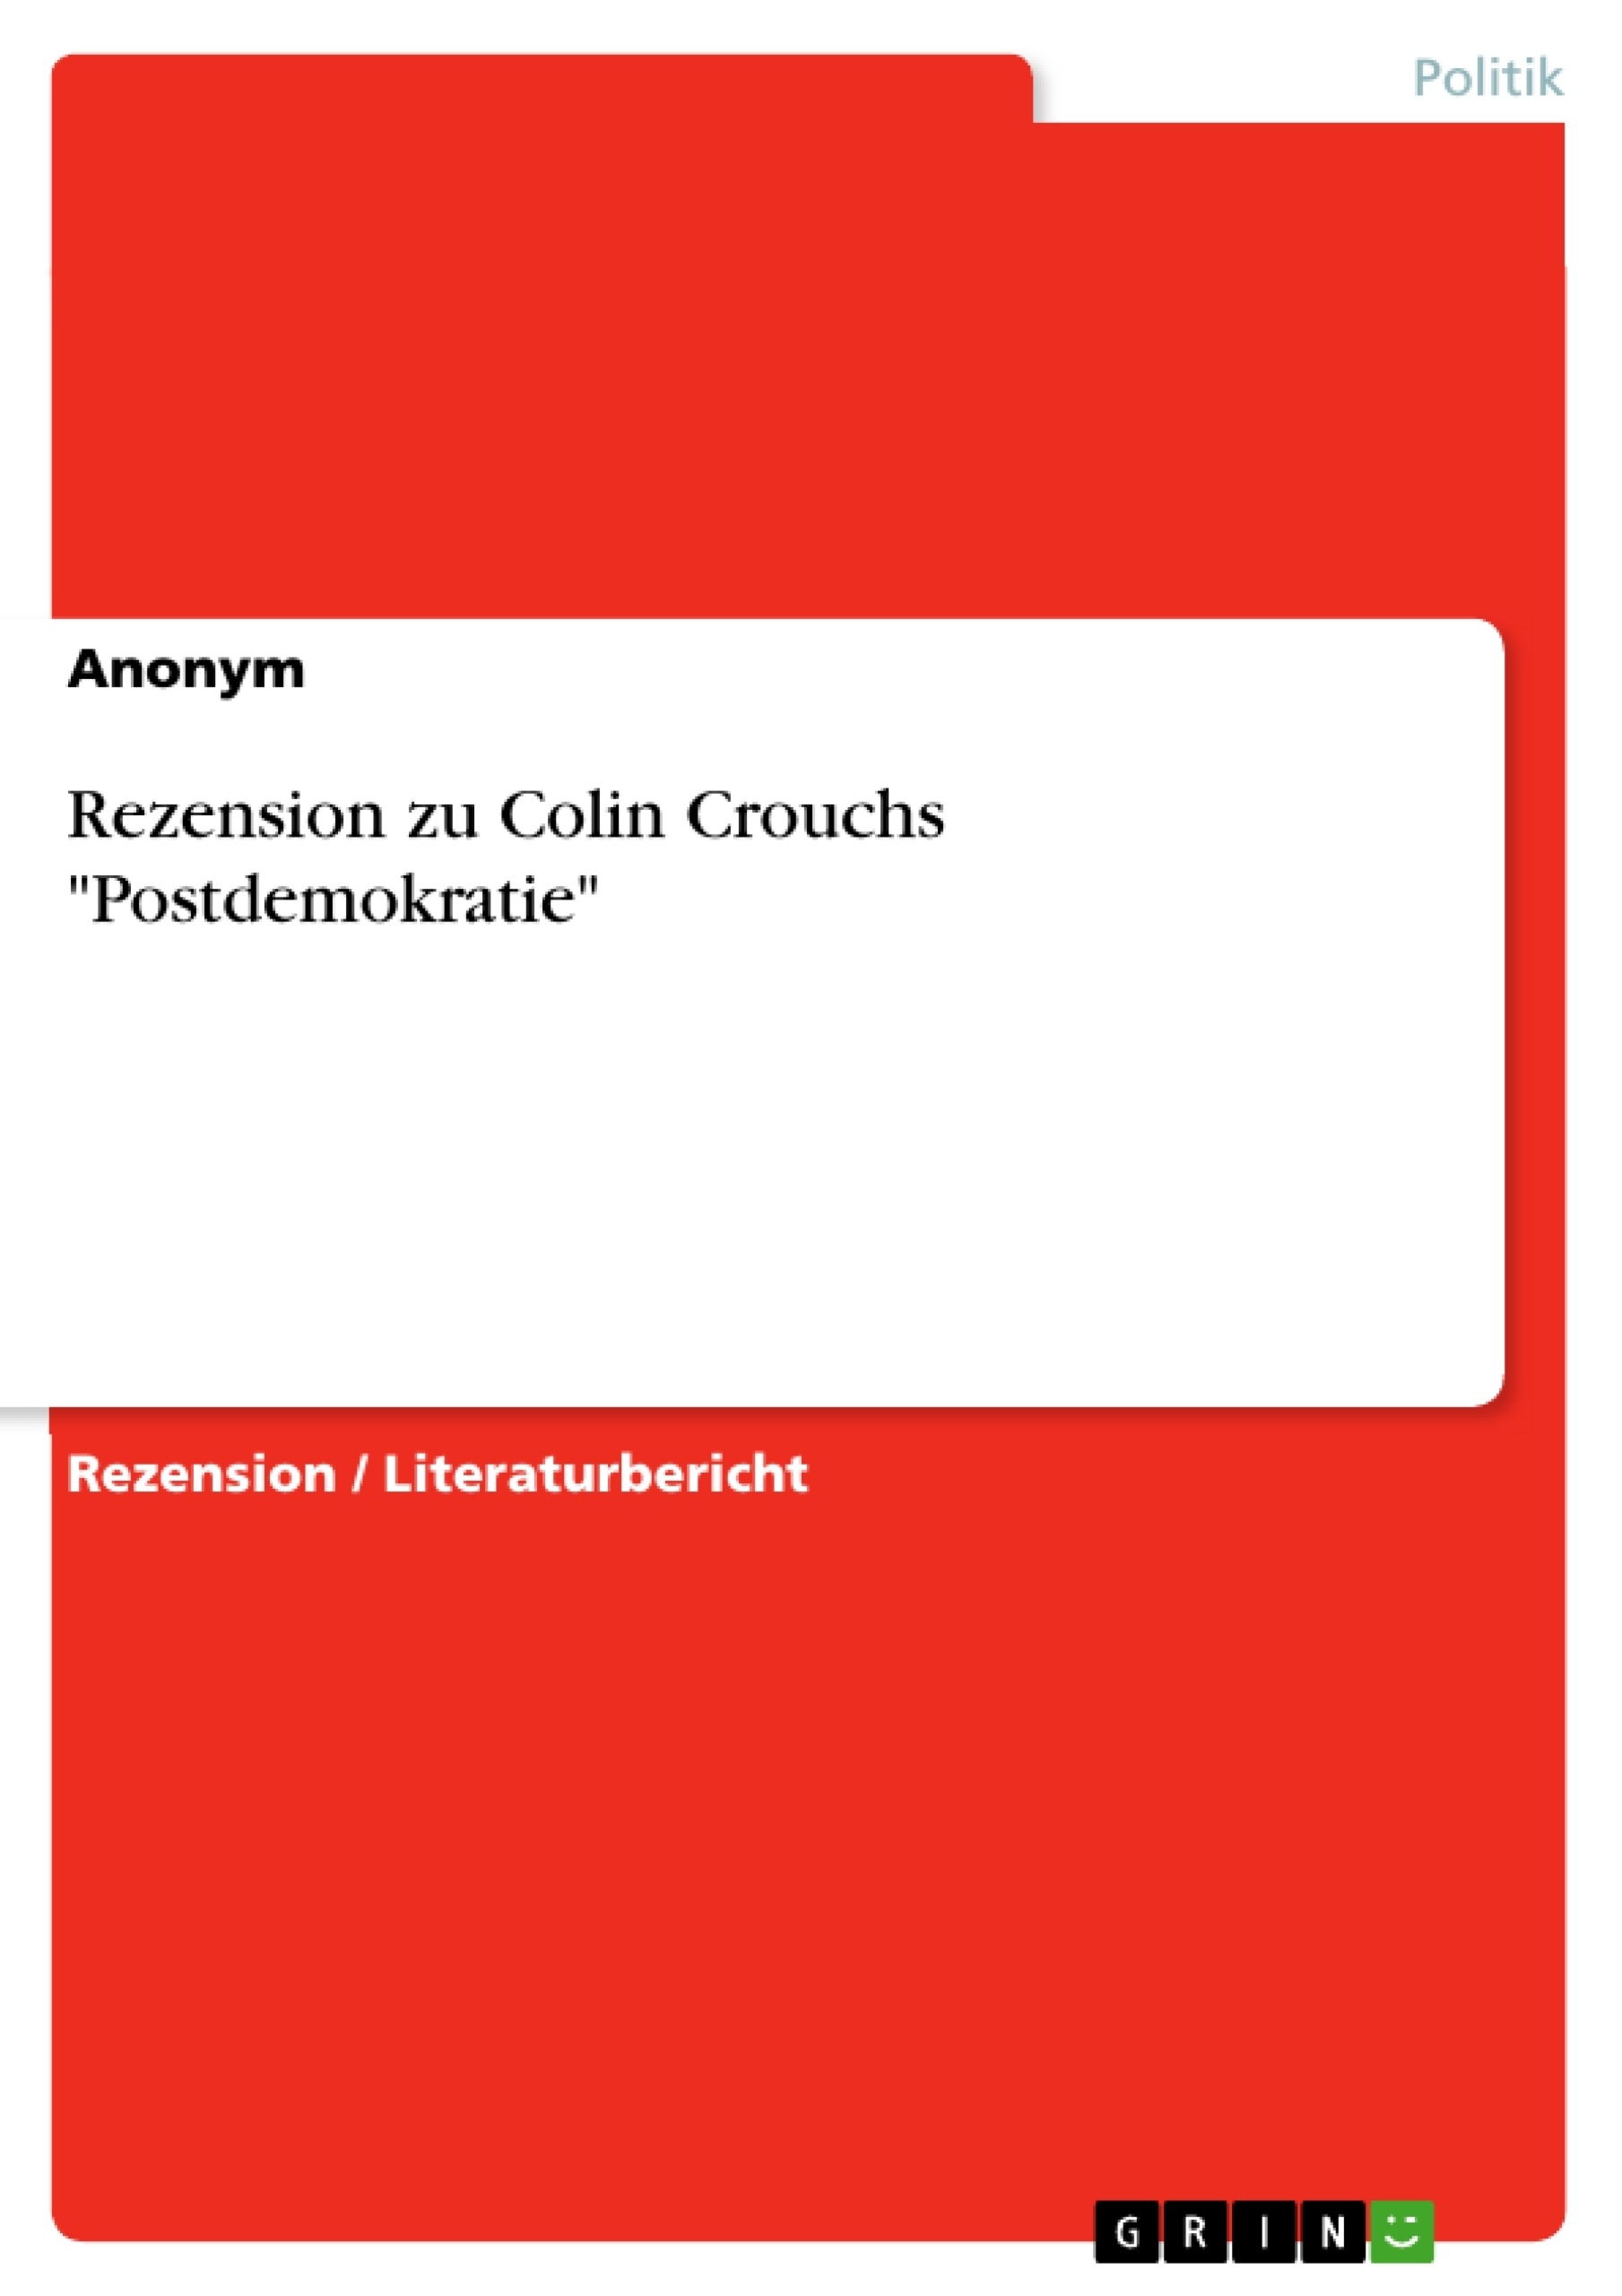 Titre: Rezension zu Colin Crouchs "Postdemokratie"